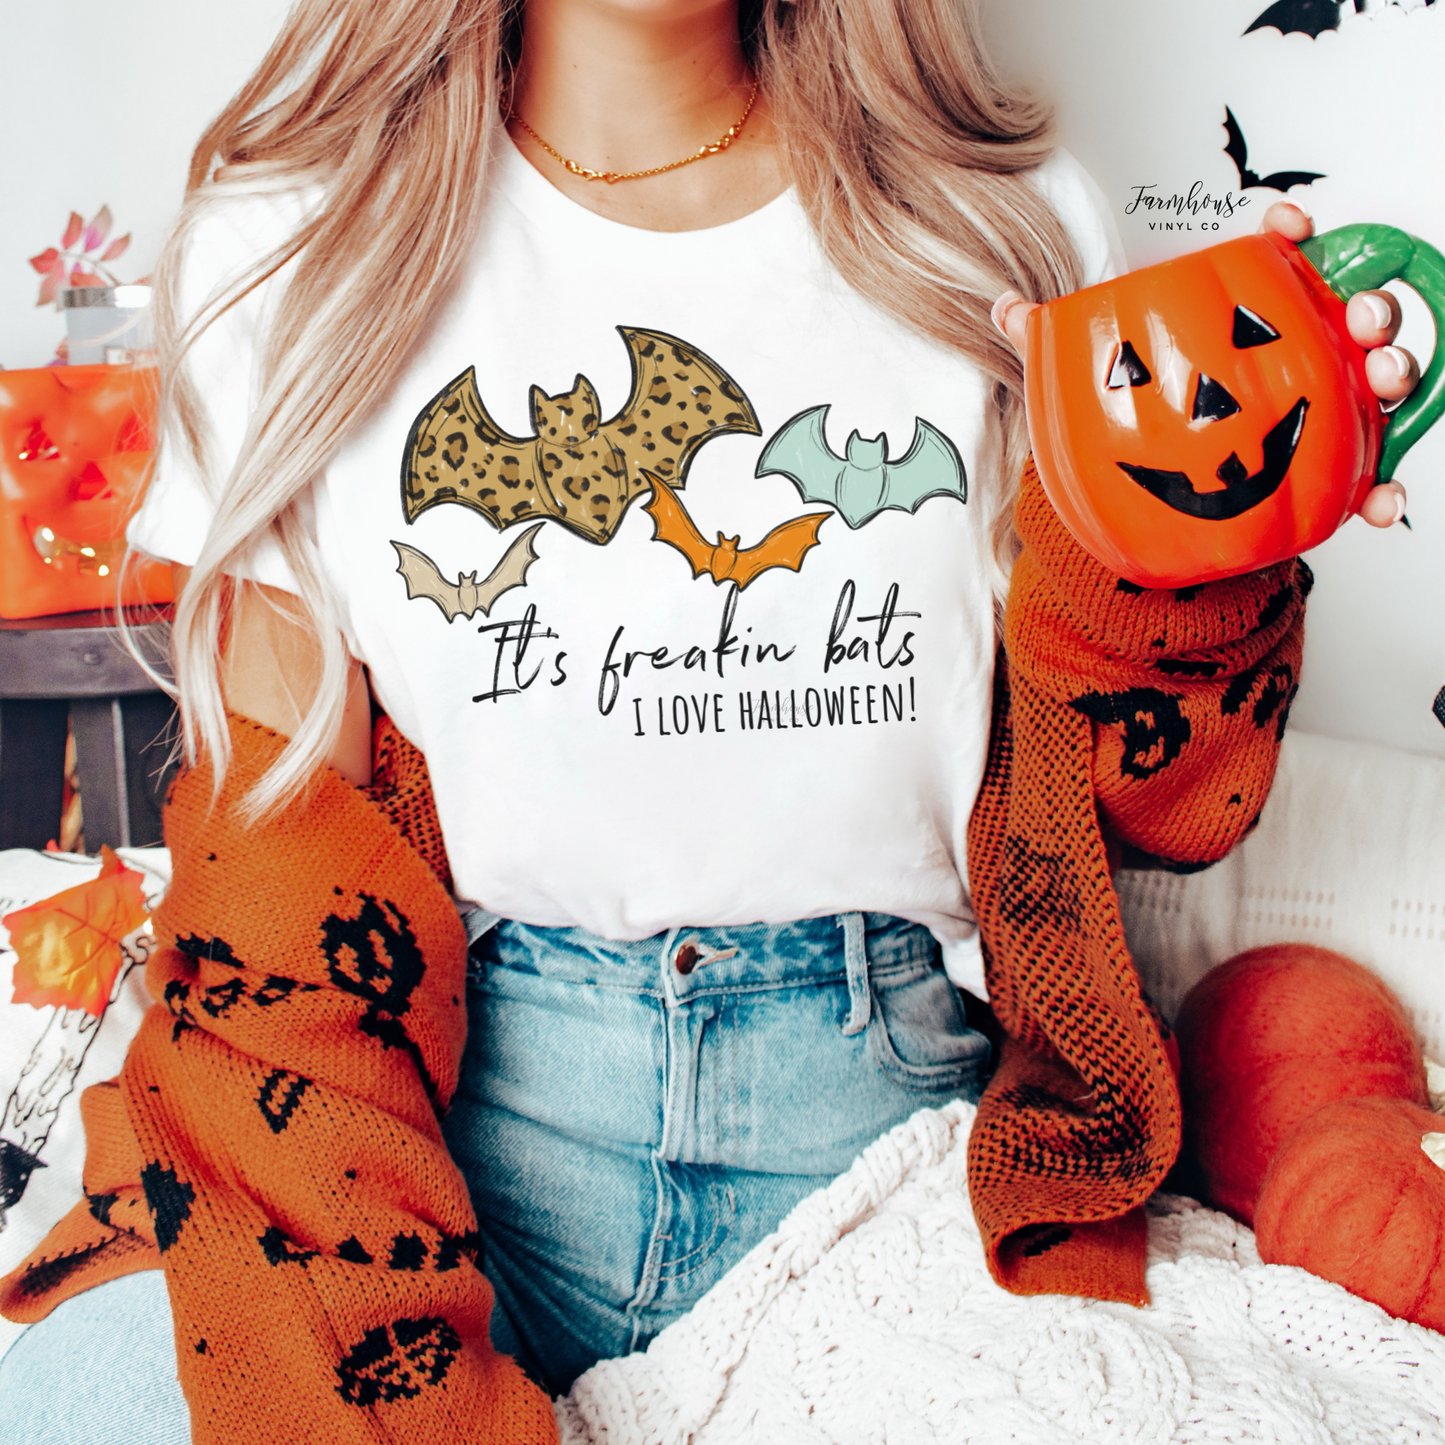 It's Freakin Bats I Love Halloween Shirt - Farmhouse Vinyl Co